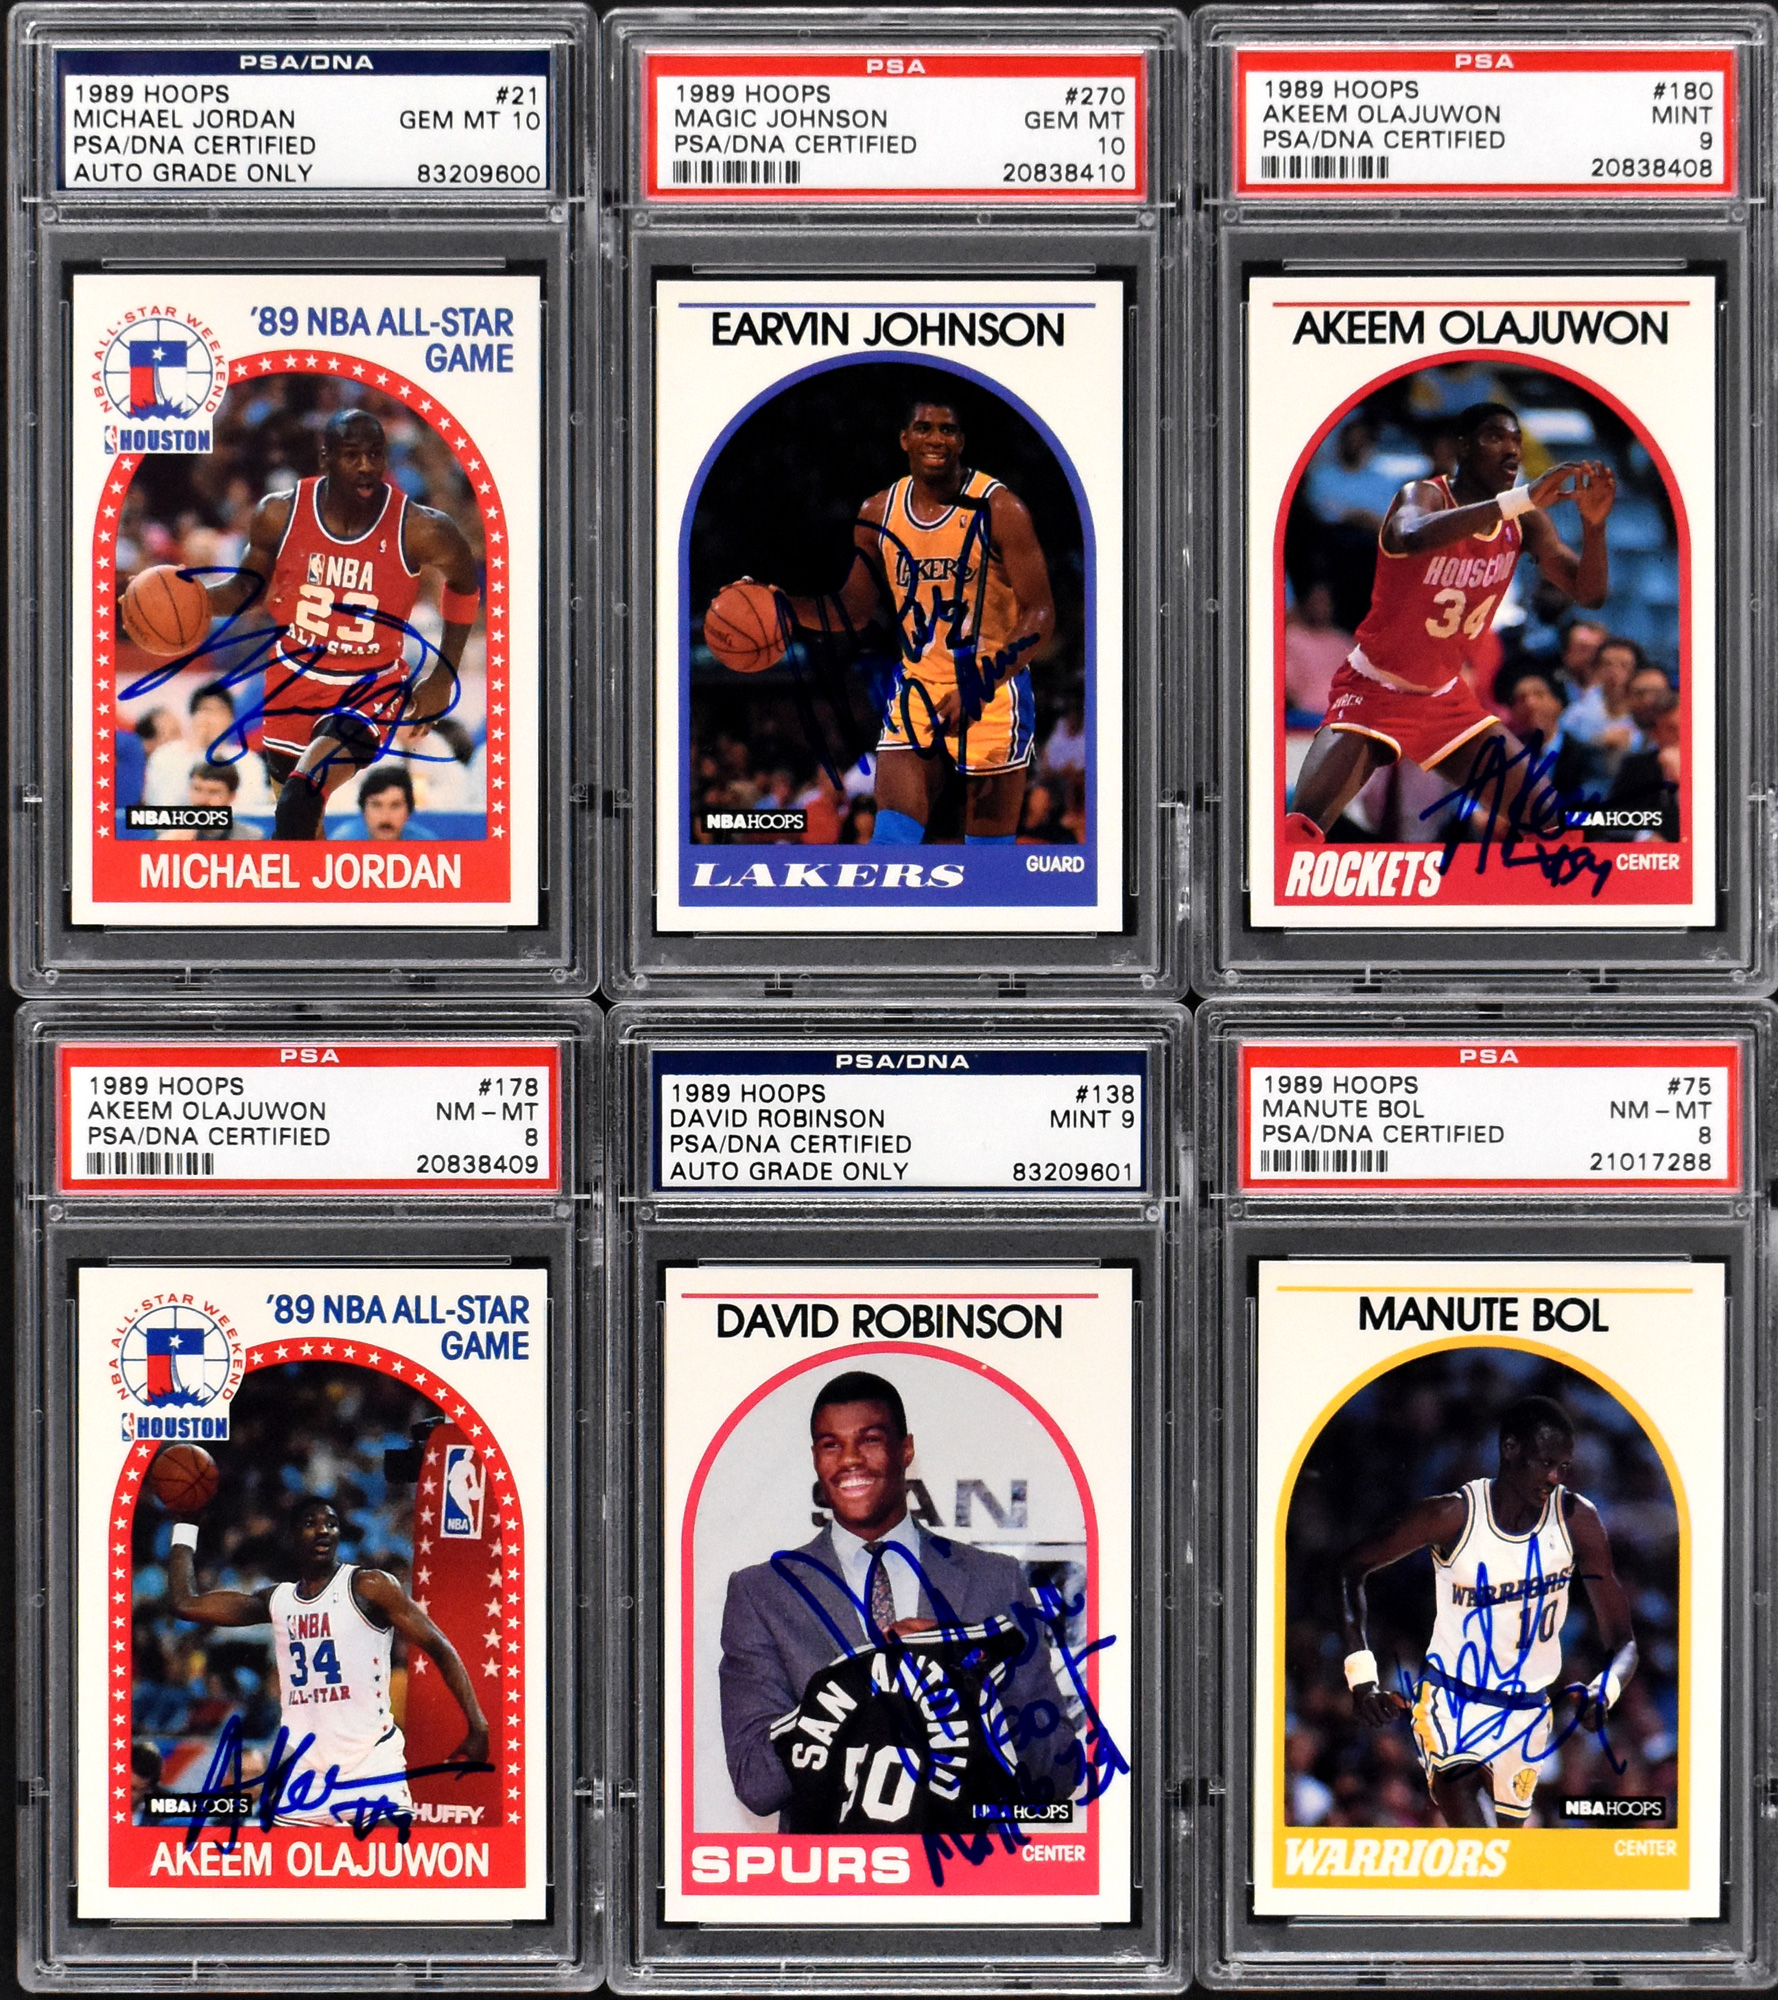 1989 NBA Hoops Akeem Olajuwon All-Star game basketball card #178 mint